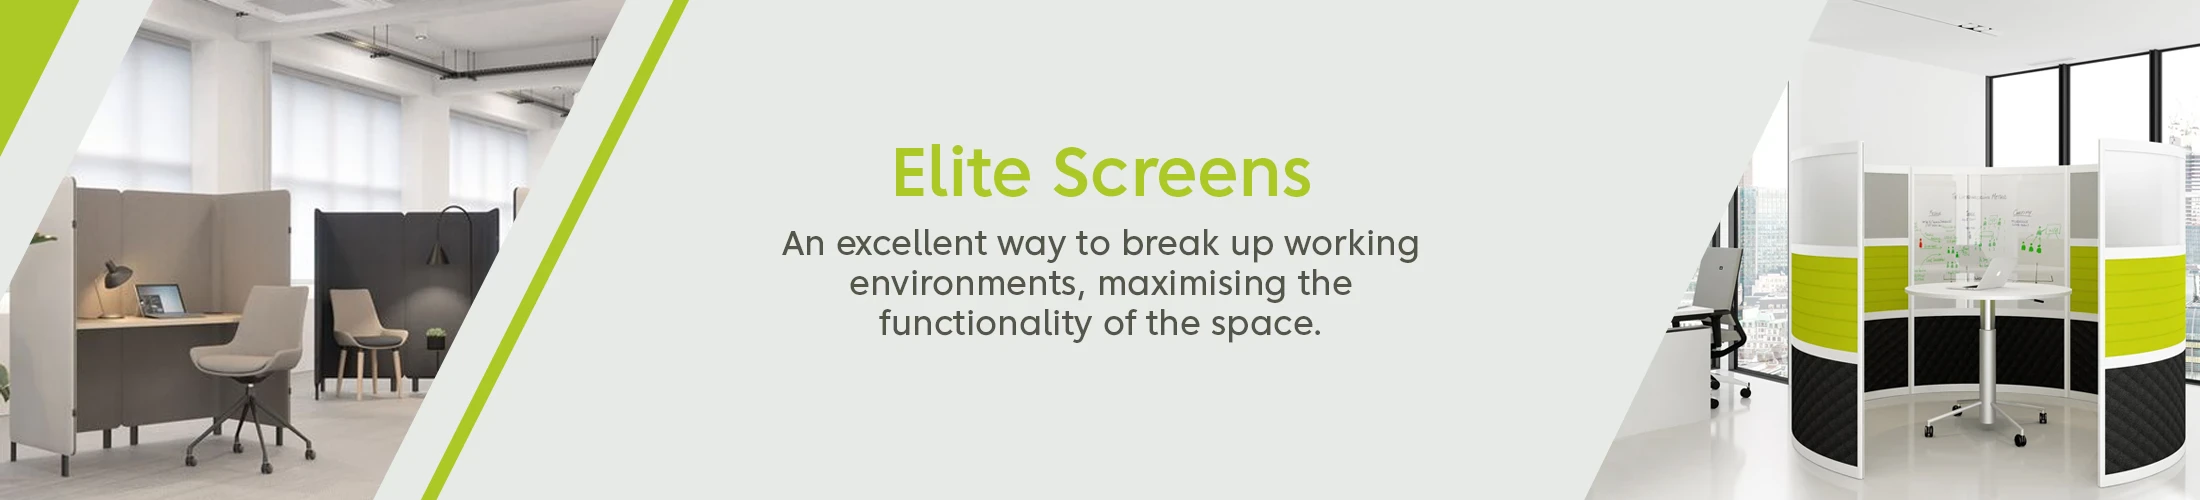 Elite System Screens Banner